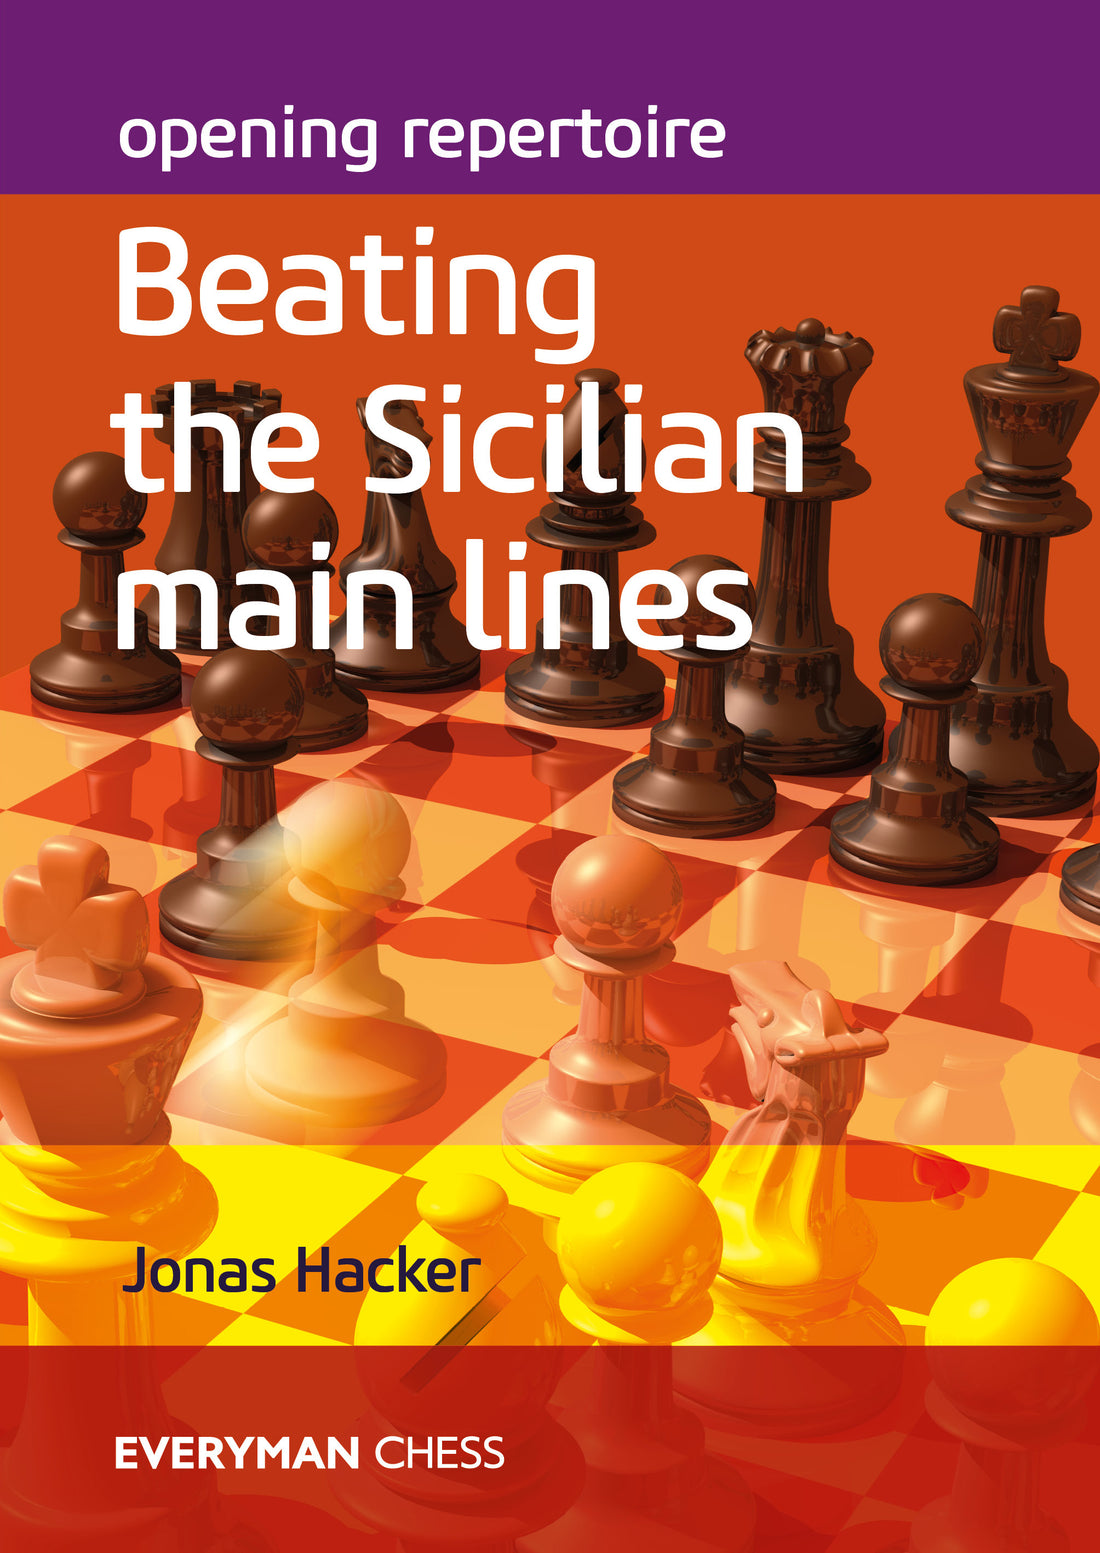 Sicilian Defense: Open, Venice Attack - Chess Openings 